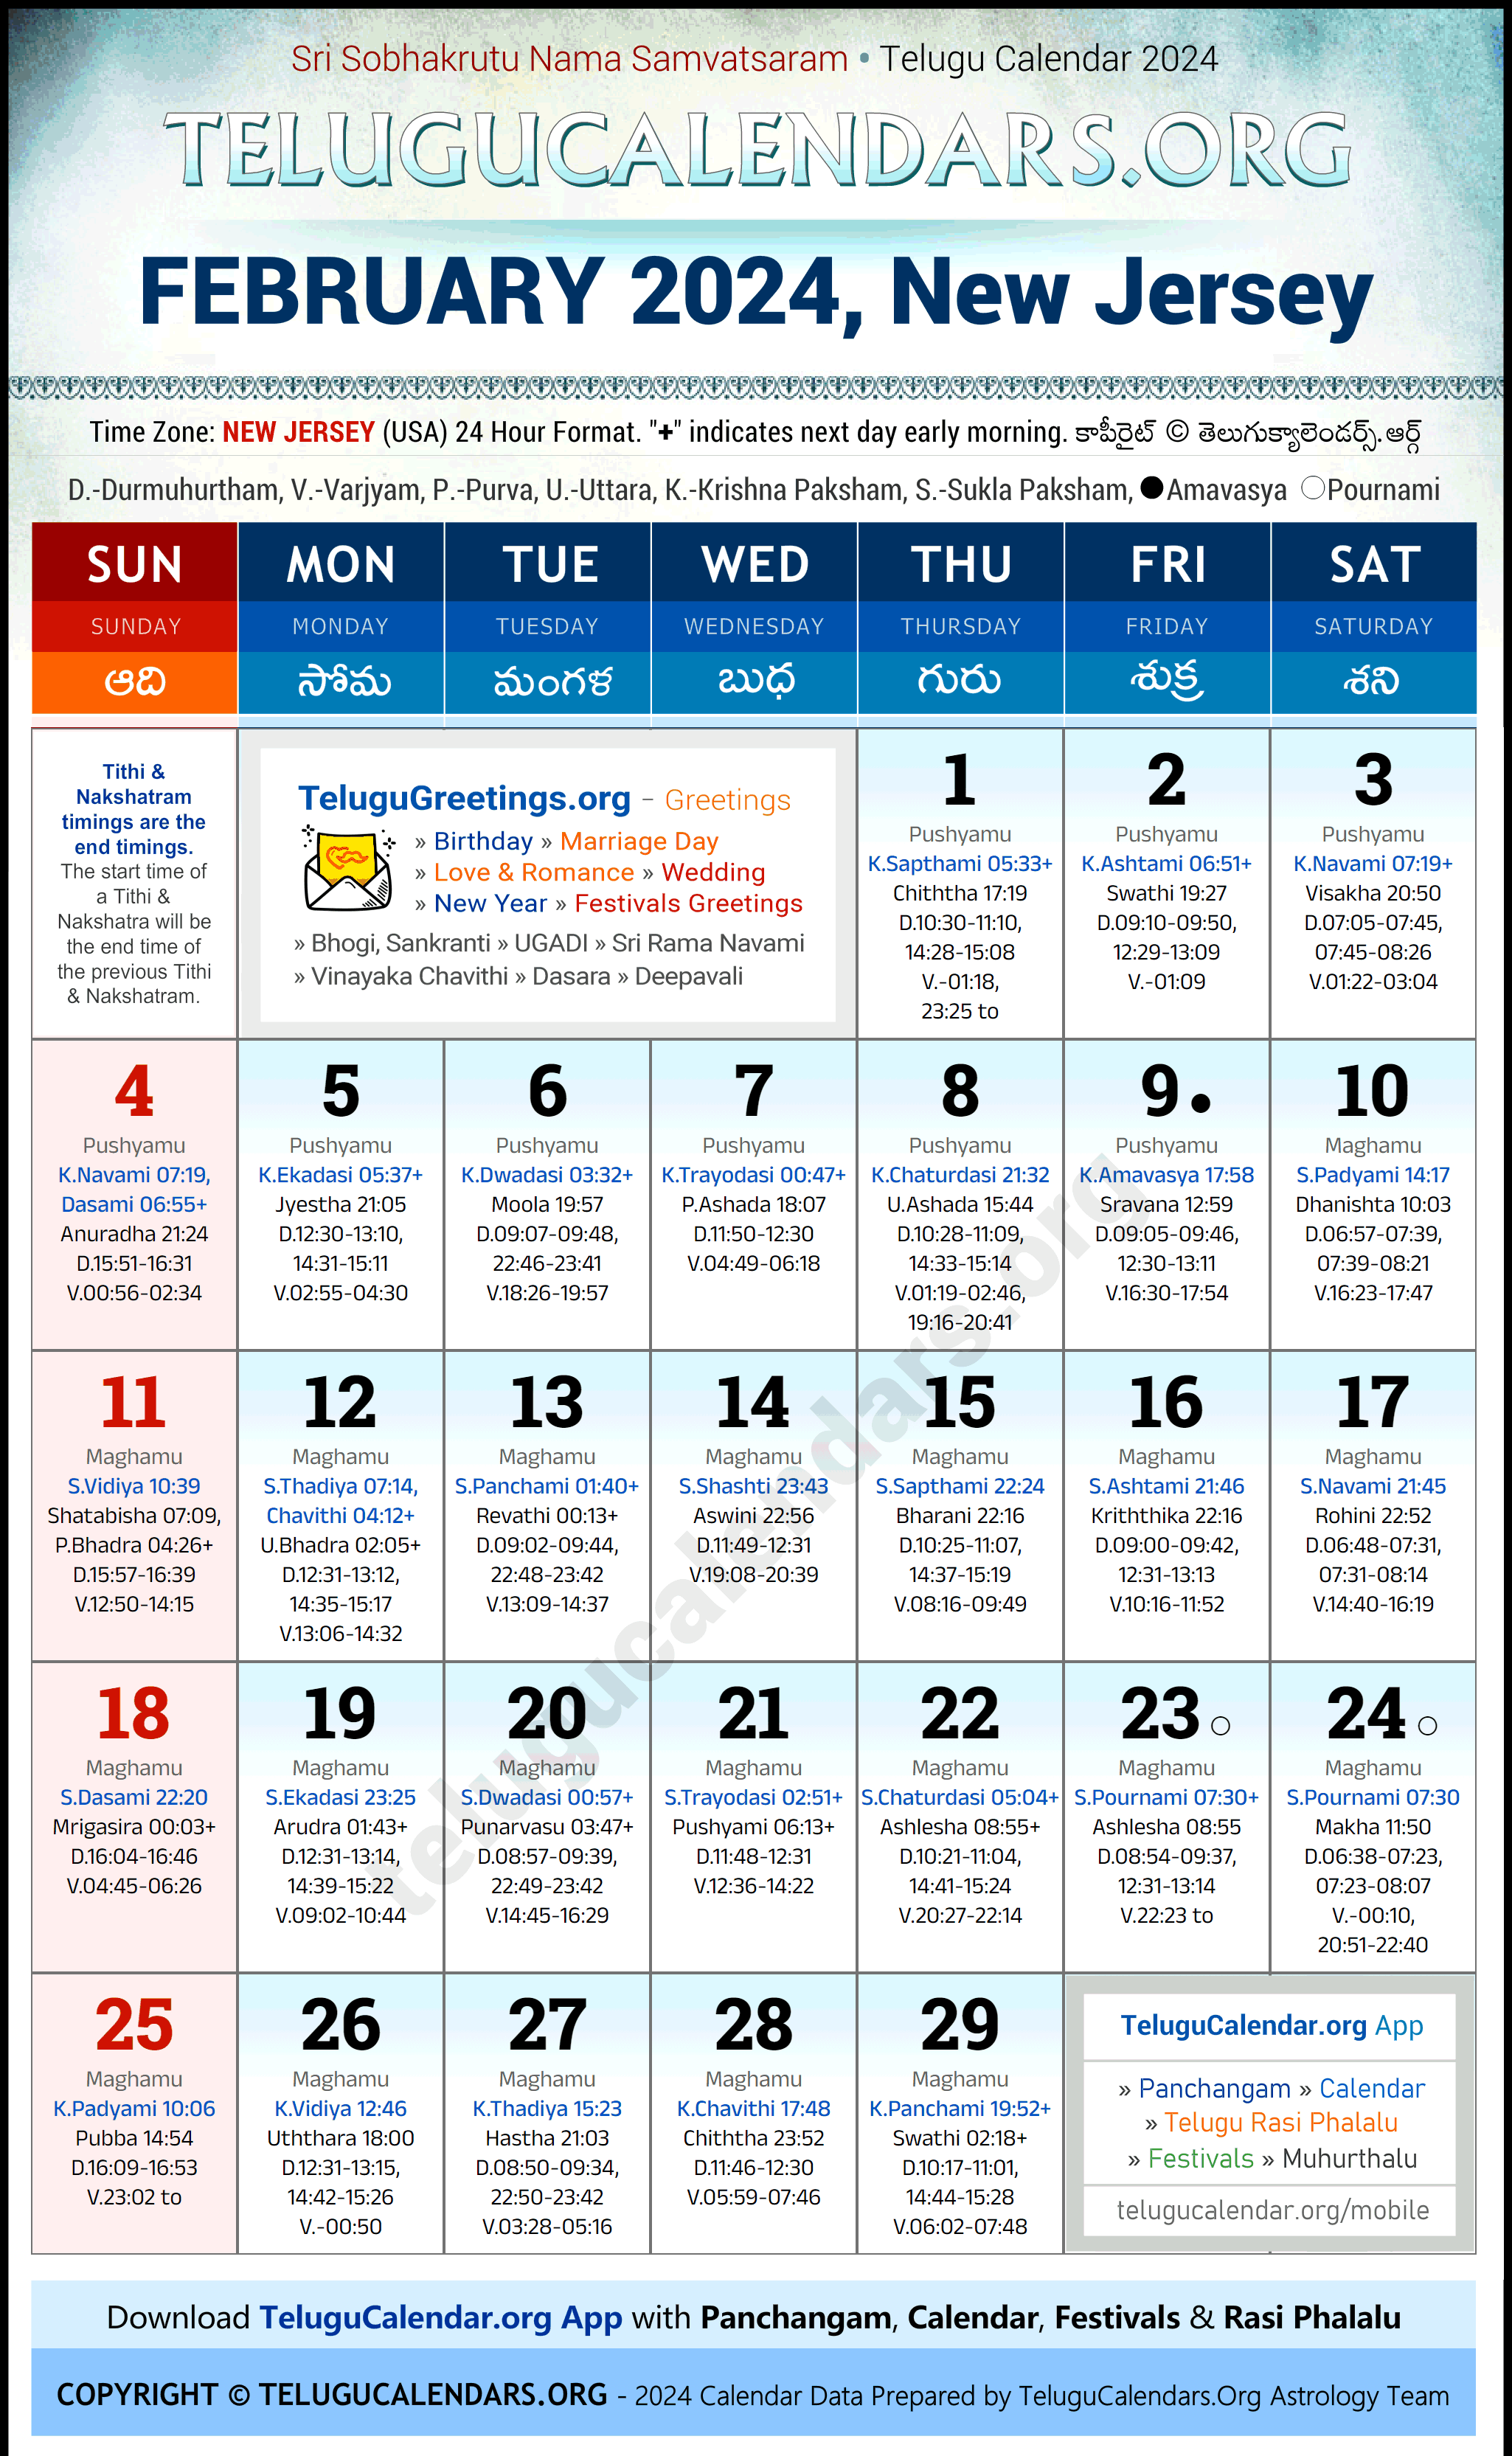 Telugu Calendar 2024 February Festivals for New Jersey